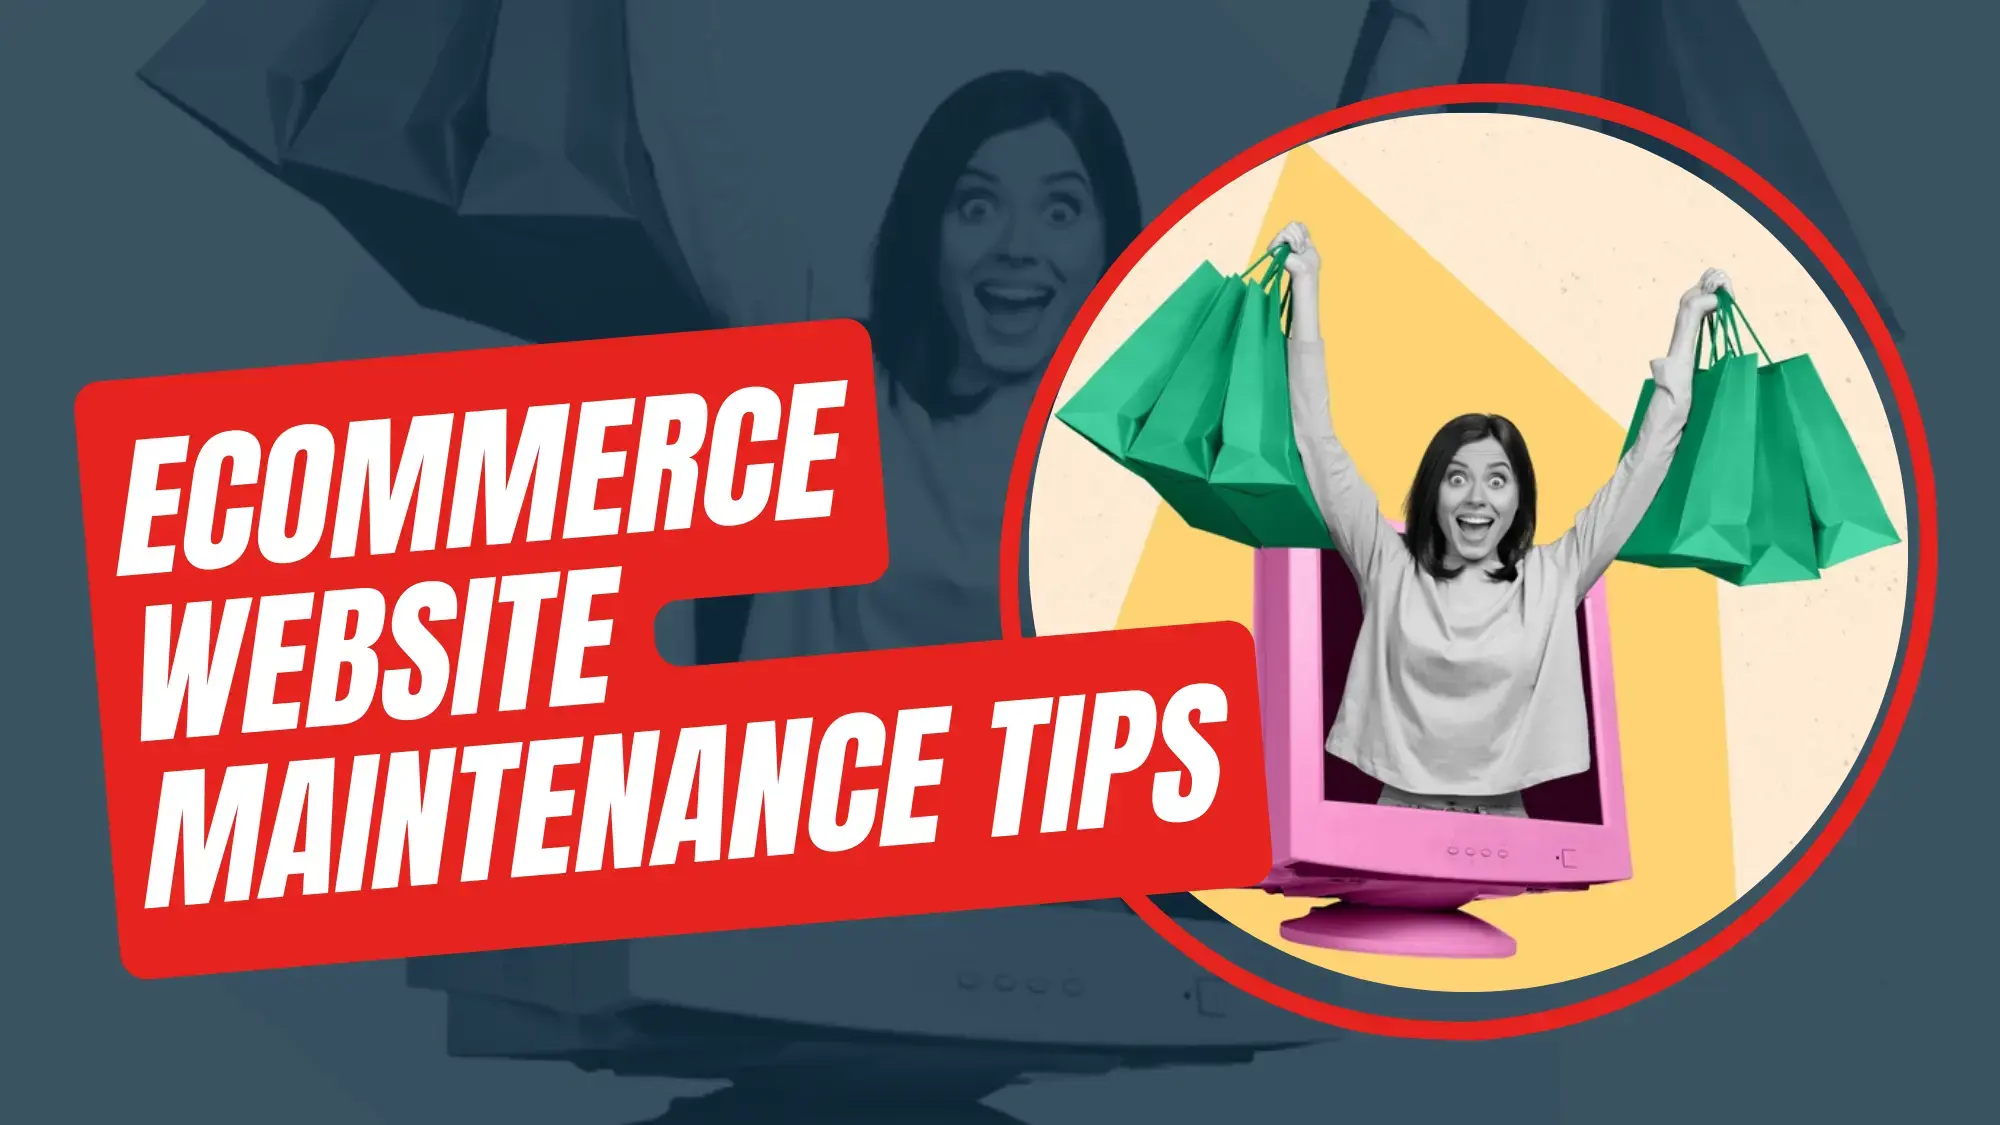 Ecommerce Website Maintenance Tips